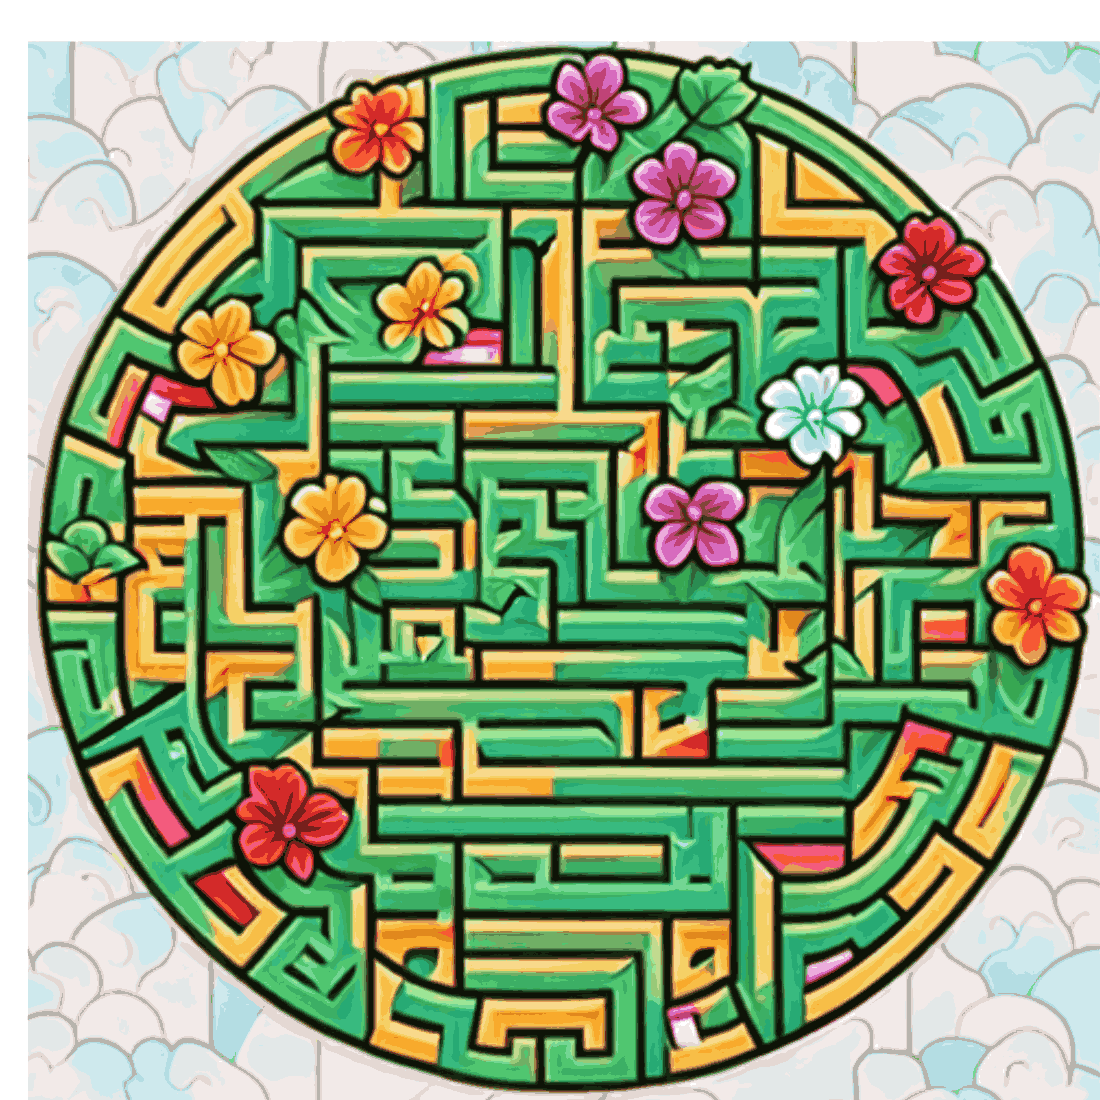 Amazon KDP Maze Puzzle Book cover image.